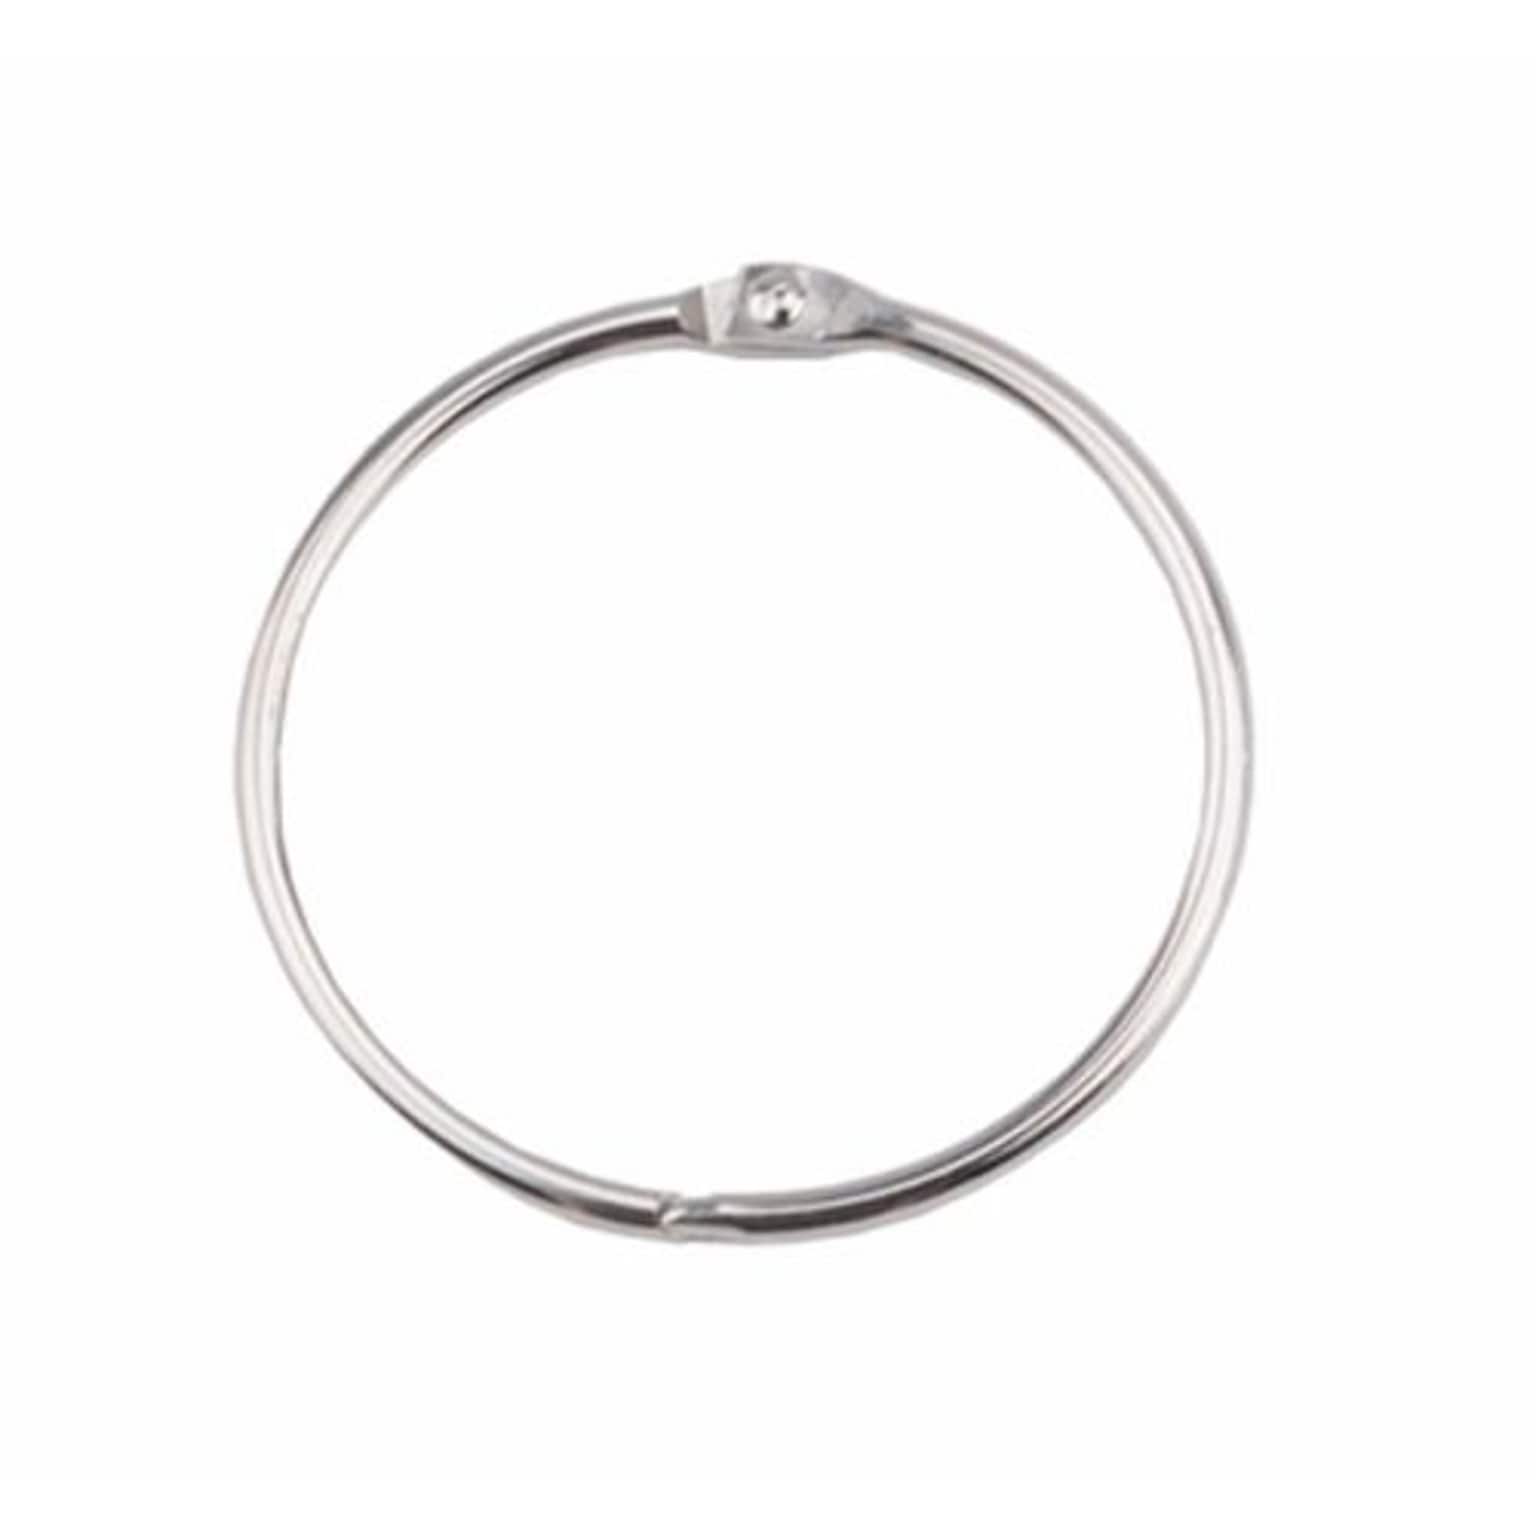 NAHANCO Metal Display Ring, 2.25 Capacity, Silver, 100/Pack (DISPLAYRING)